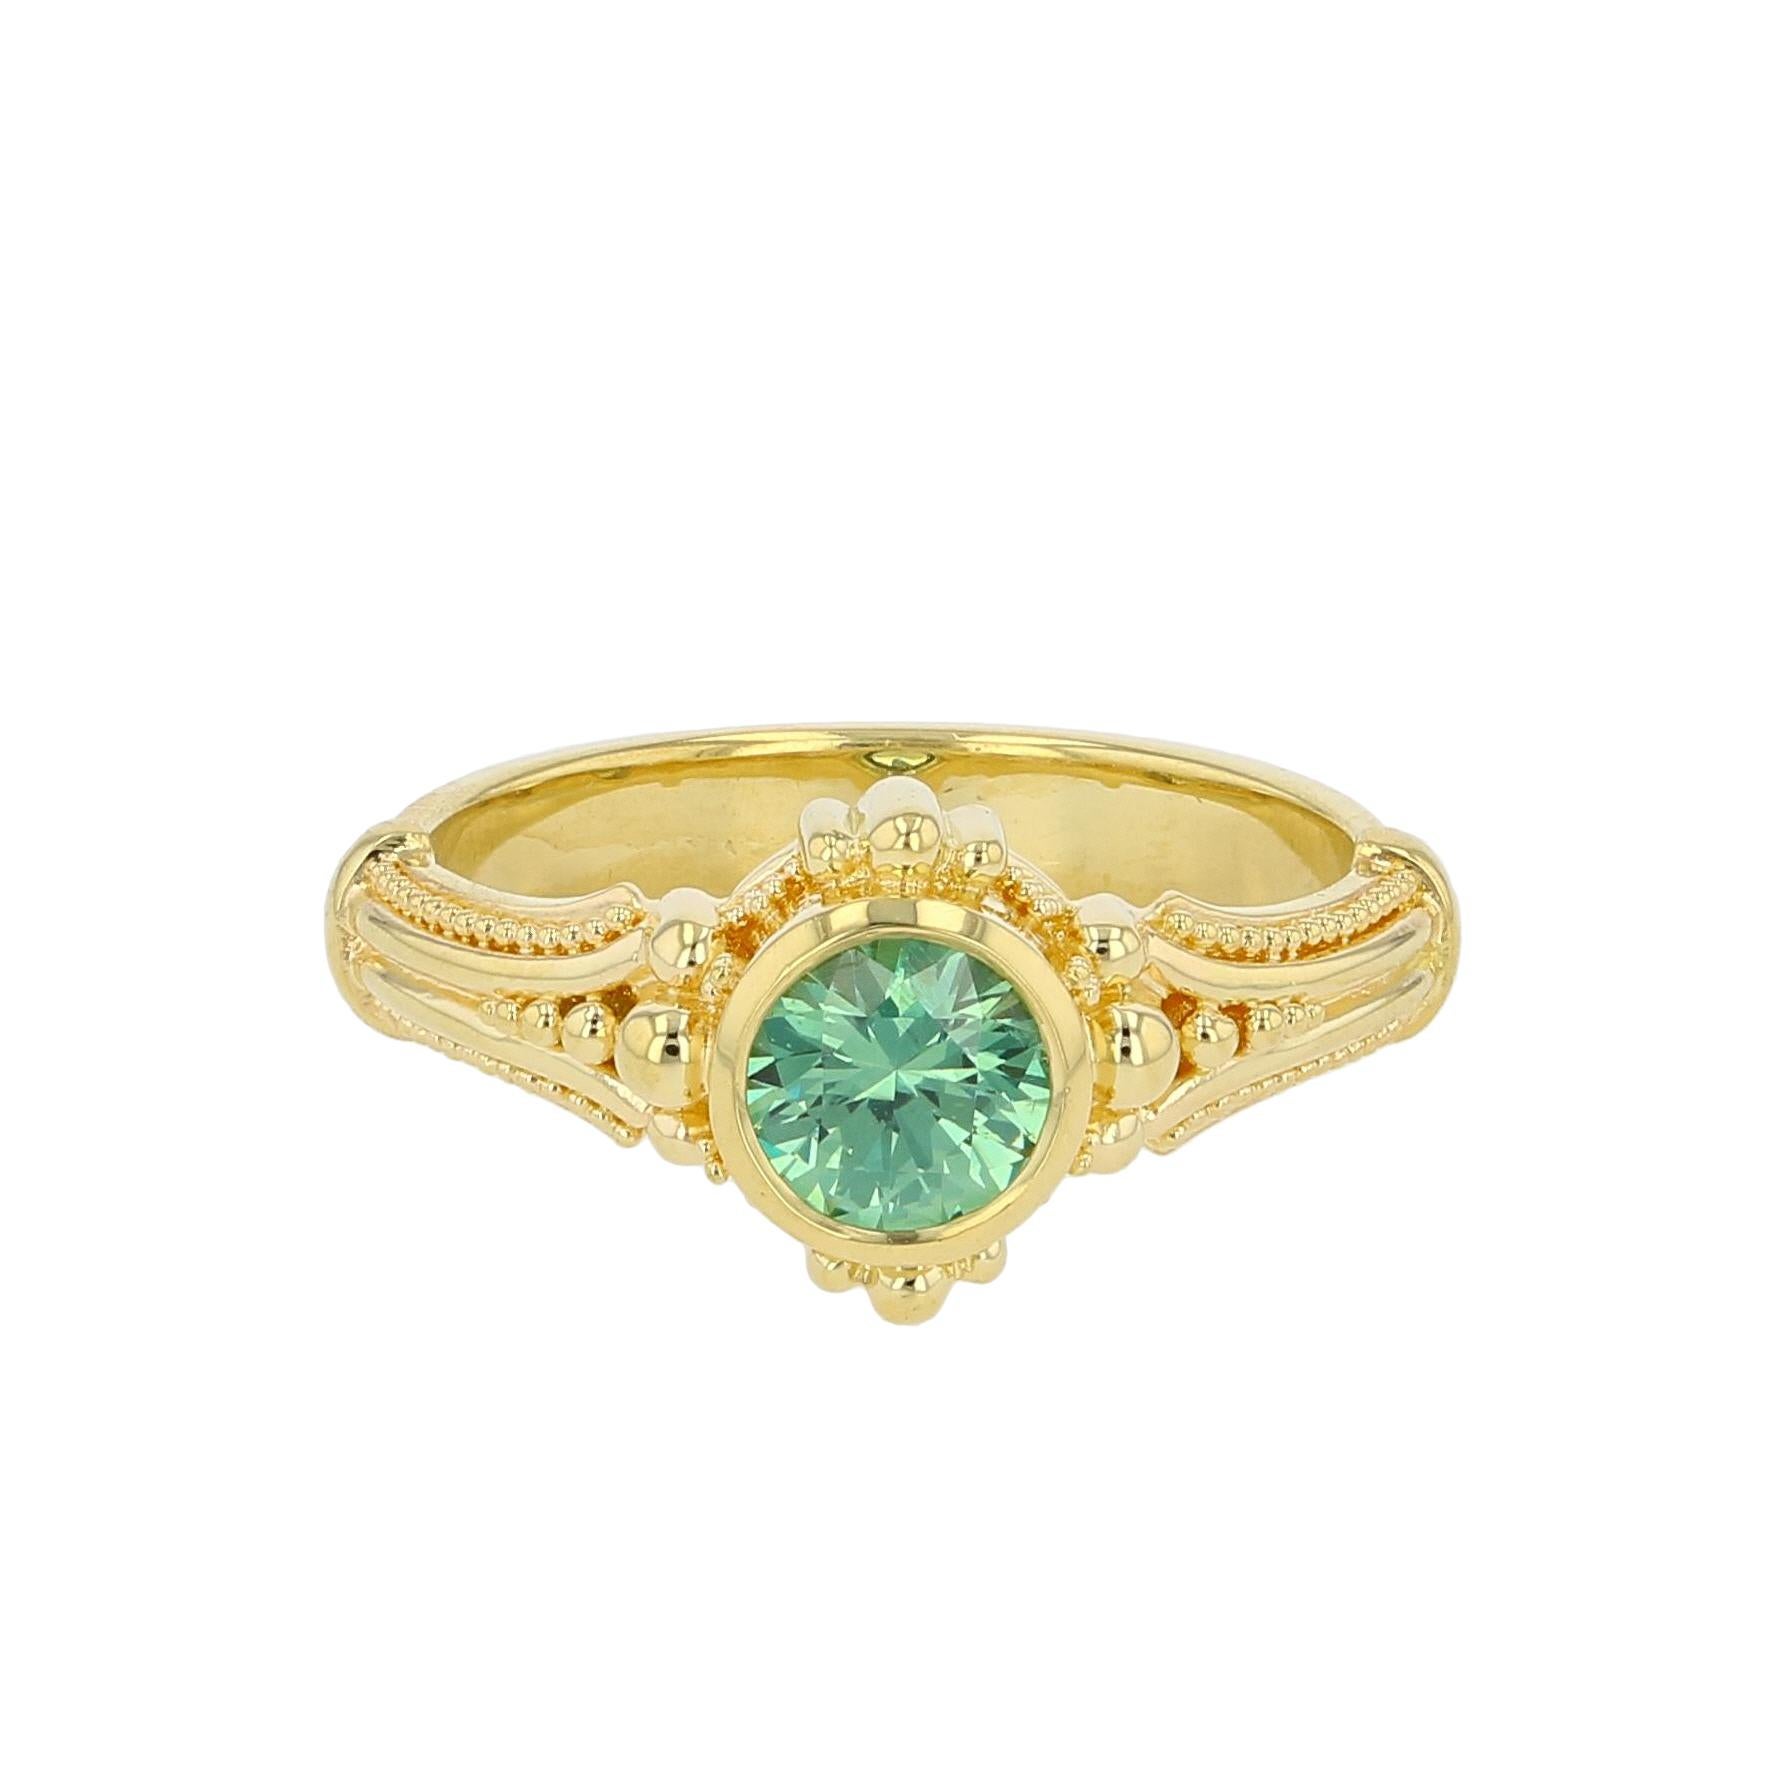 Mixed Cut Kent Raible 18 Karat Gold Green Garnet Solitaire Ring with Fine Granulation